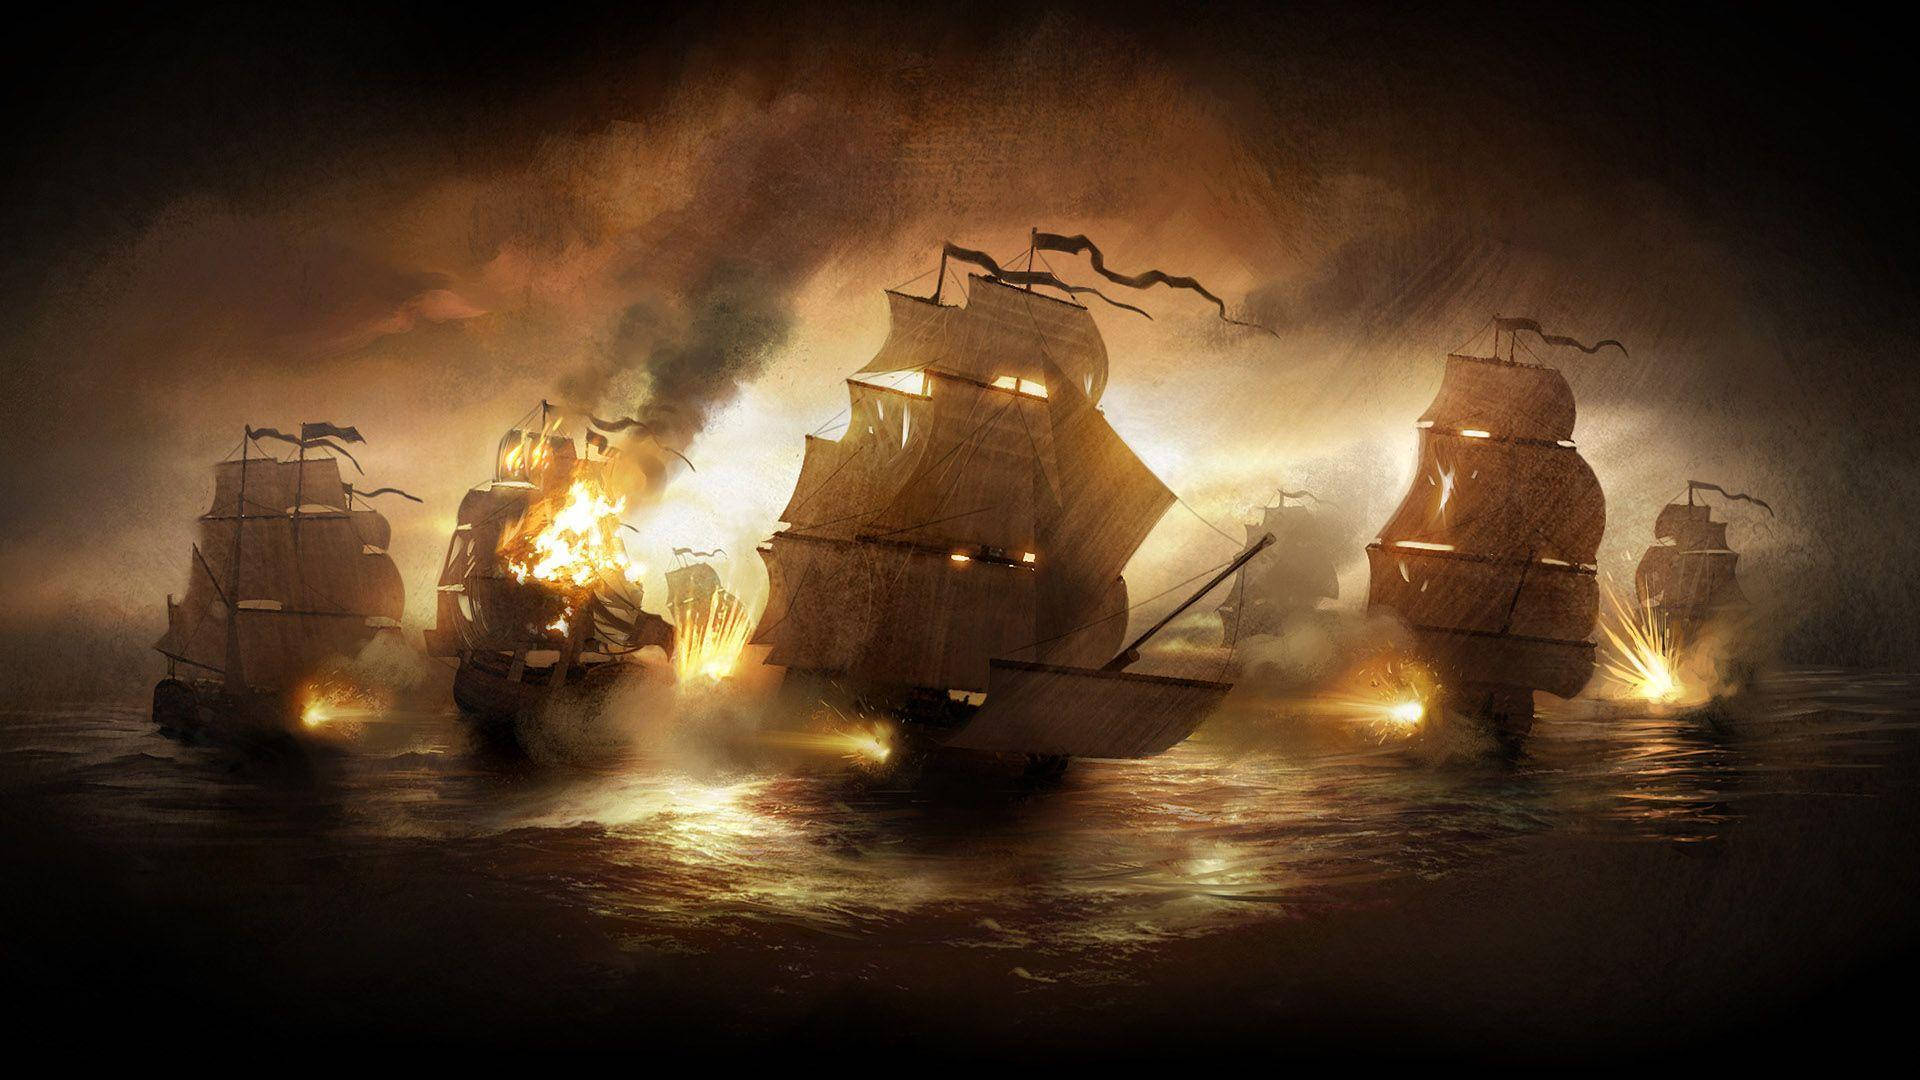 Ambushed Pirate Ships Wallpaper